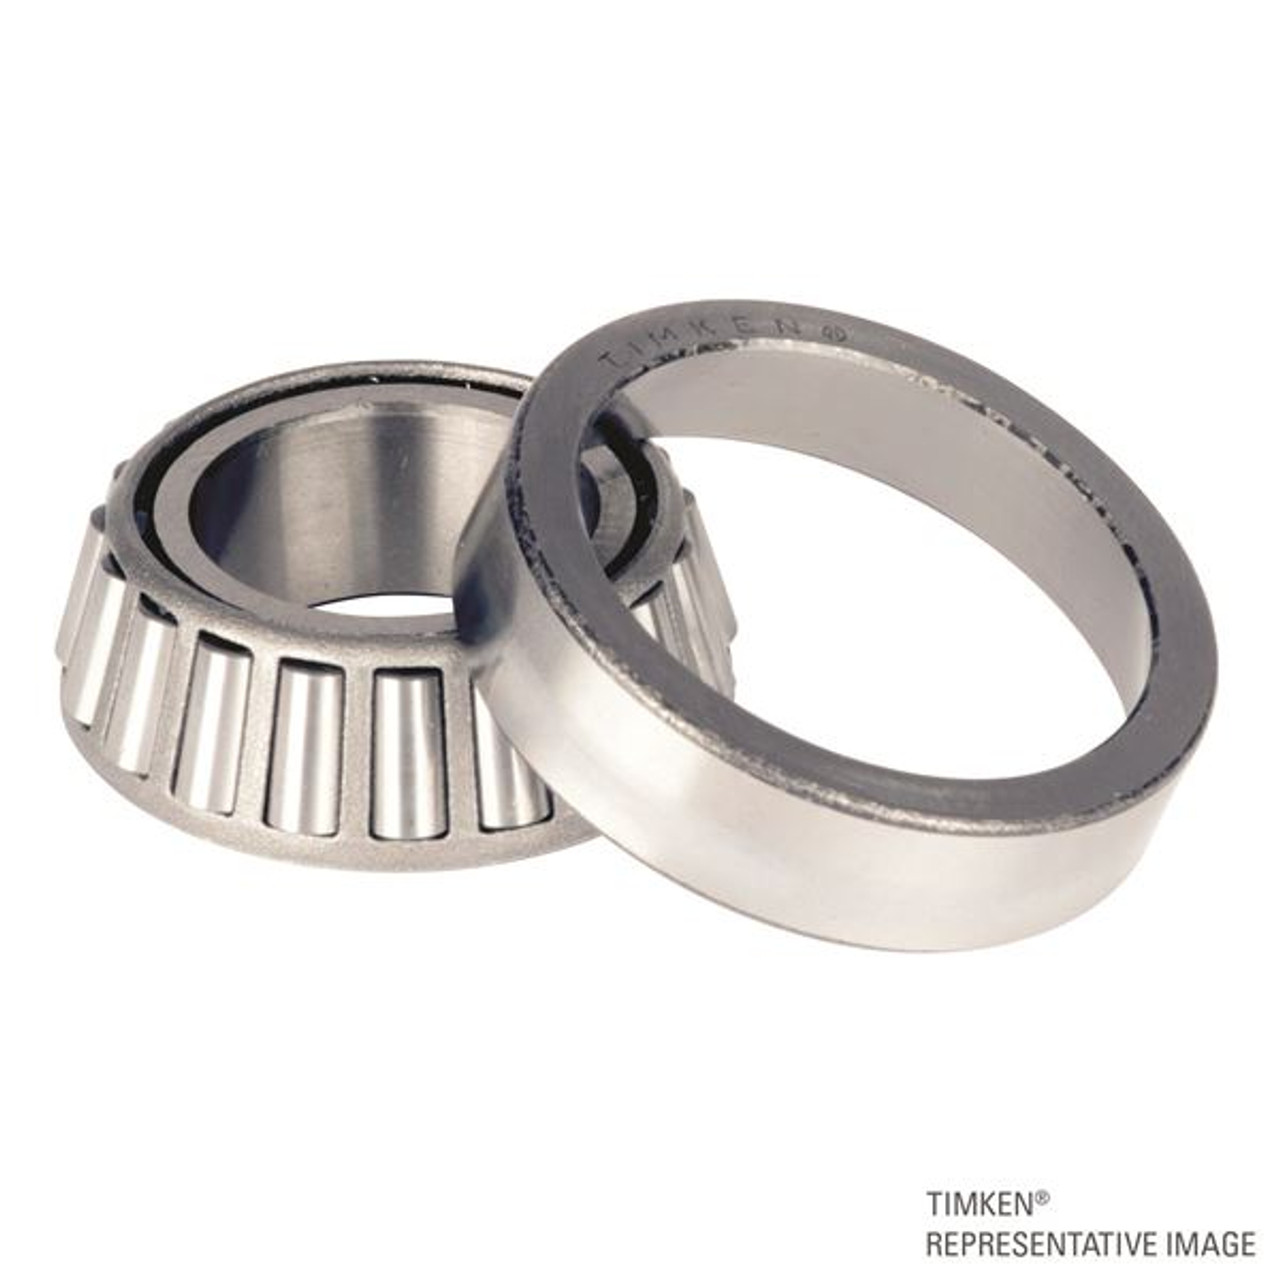 Timken® Metric Cup & Cone Assembly - Power Dense  NP654538-90KA1